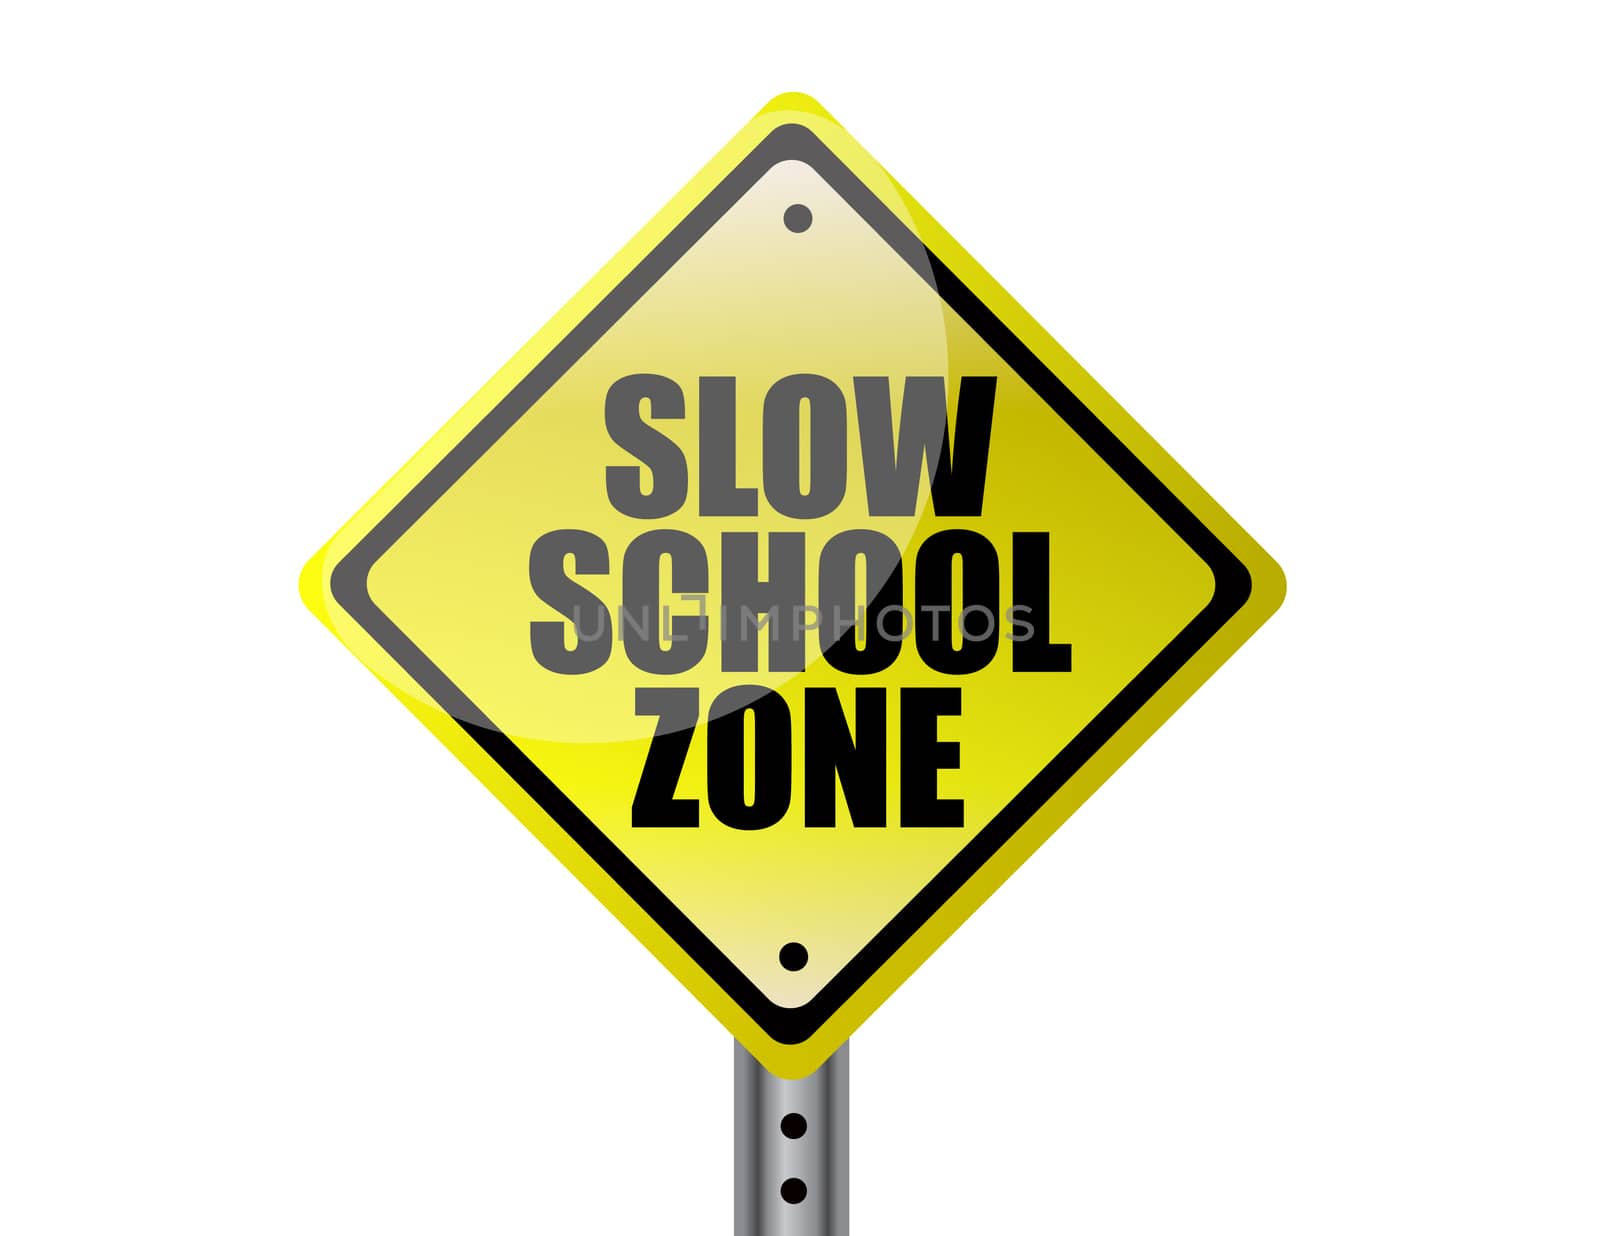 Slow school zone yellow warning street sign over white background.Slow school zone yellow warning street sign over white background.